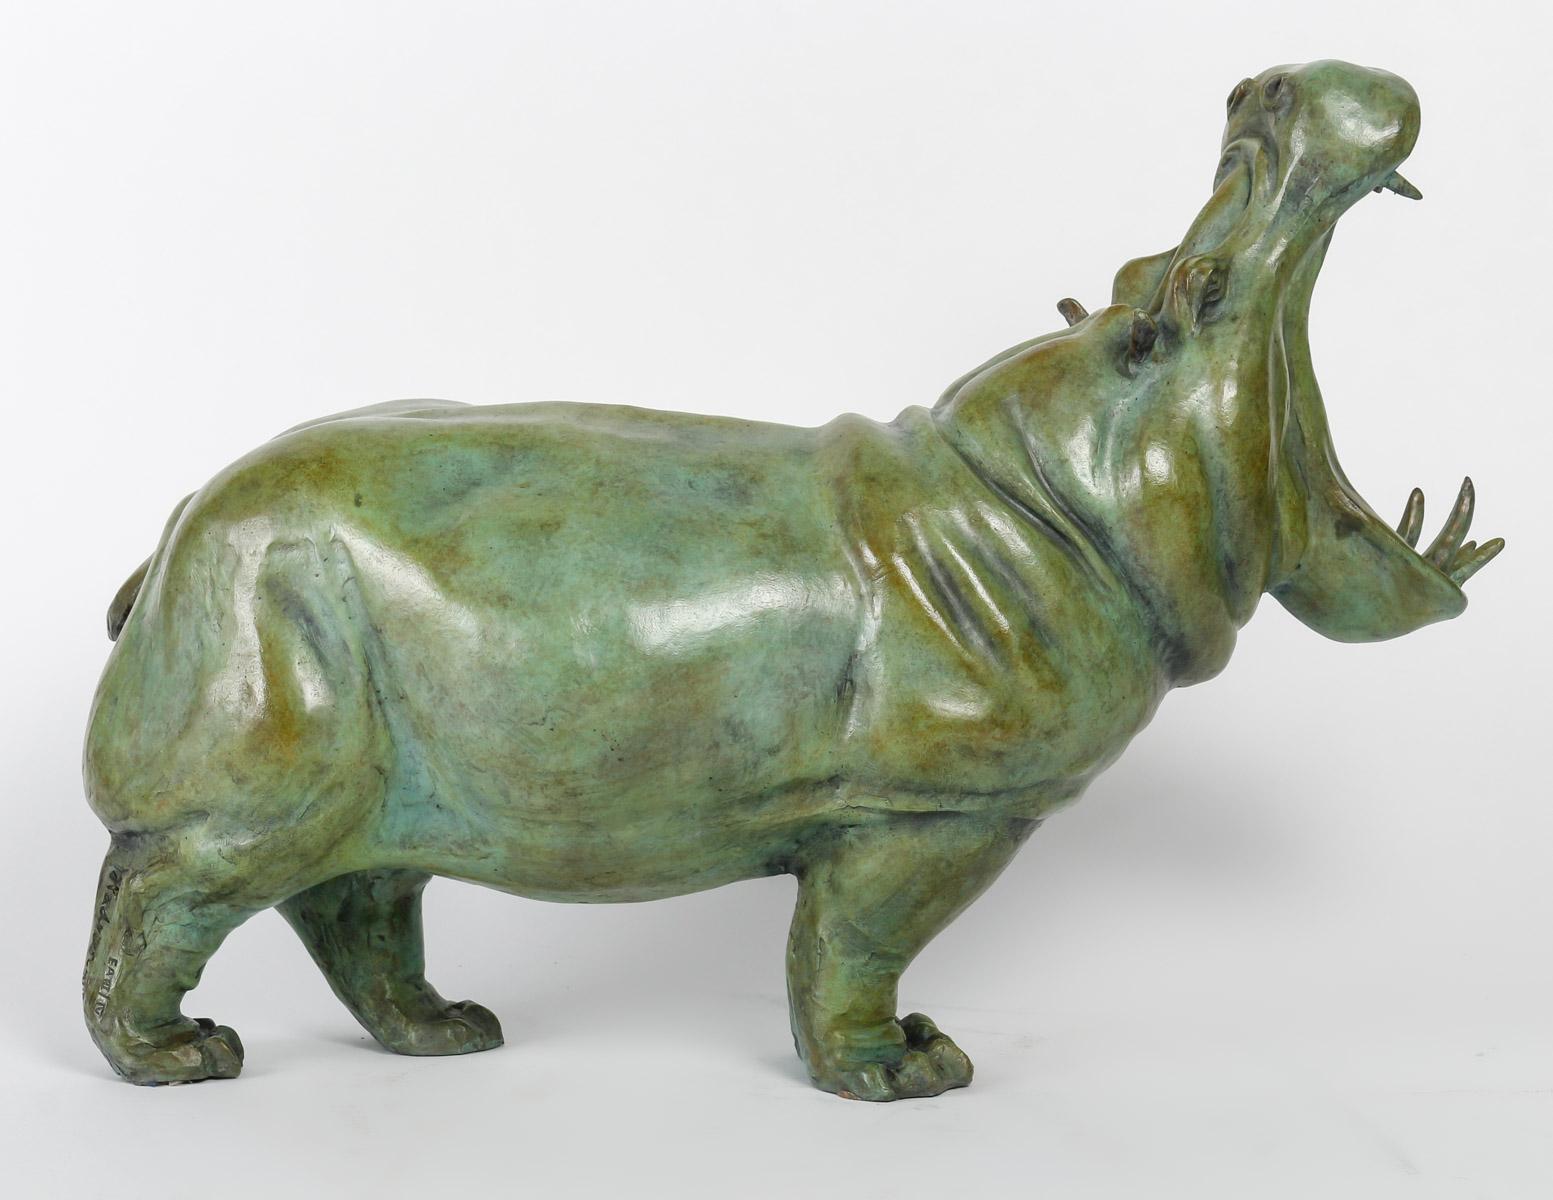 Contemporary Bronze Sculpture of a Hippopotamus by Artist Hadrien David.